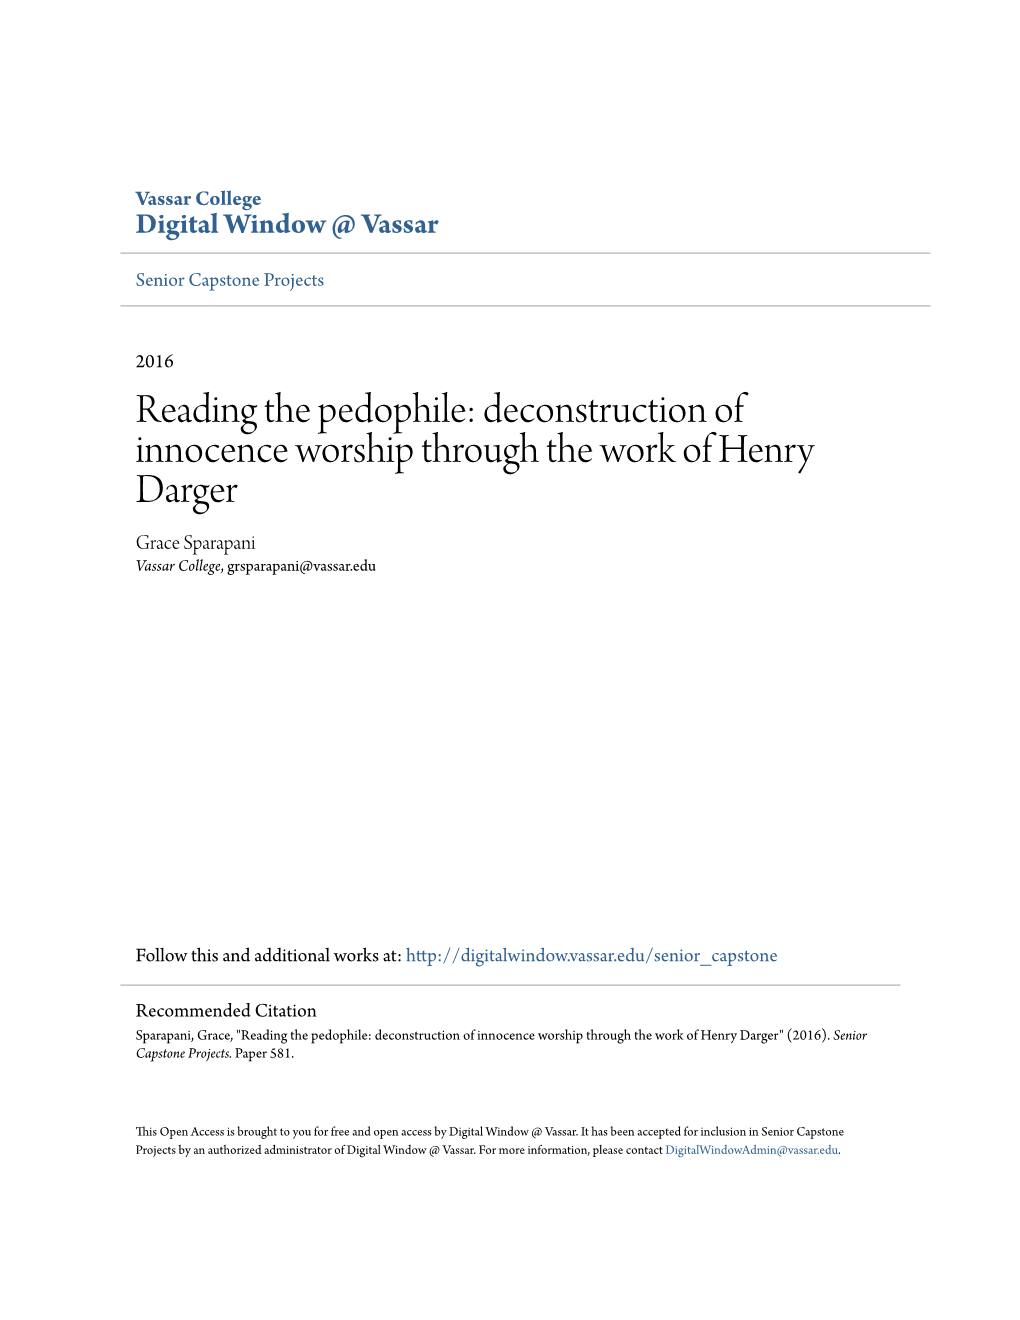 Reading the Pedophile: Deconstruction of Innocence Worship Through the Work of Henry Darger Grace Sparapani Vassar College, Grsparapani@Vassar.Edu